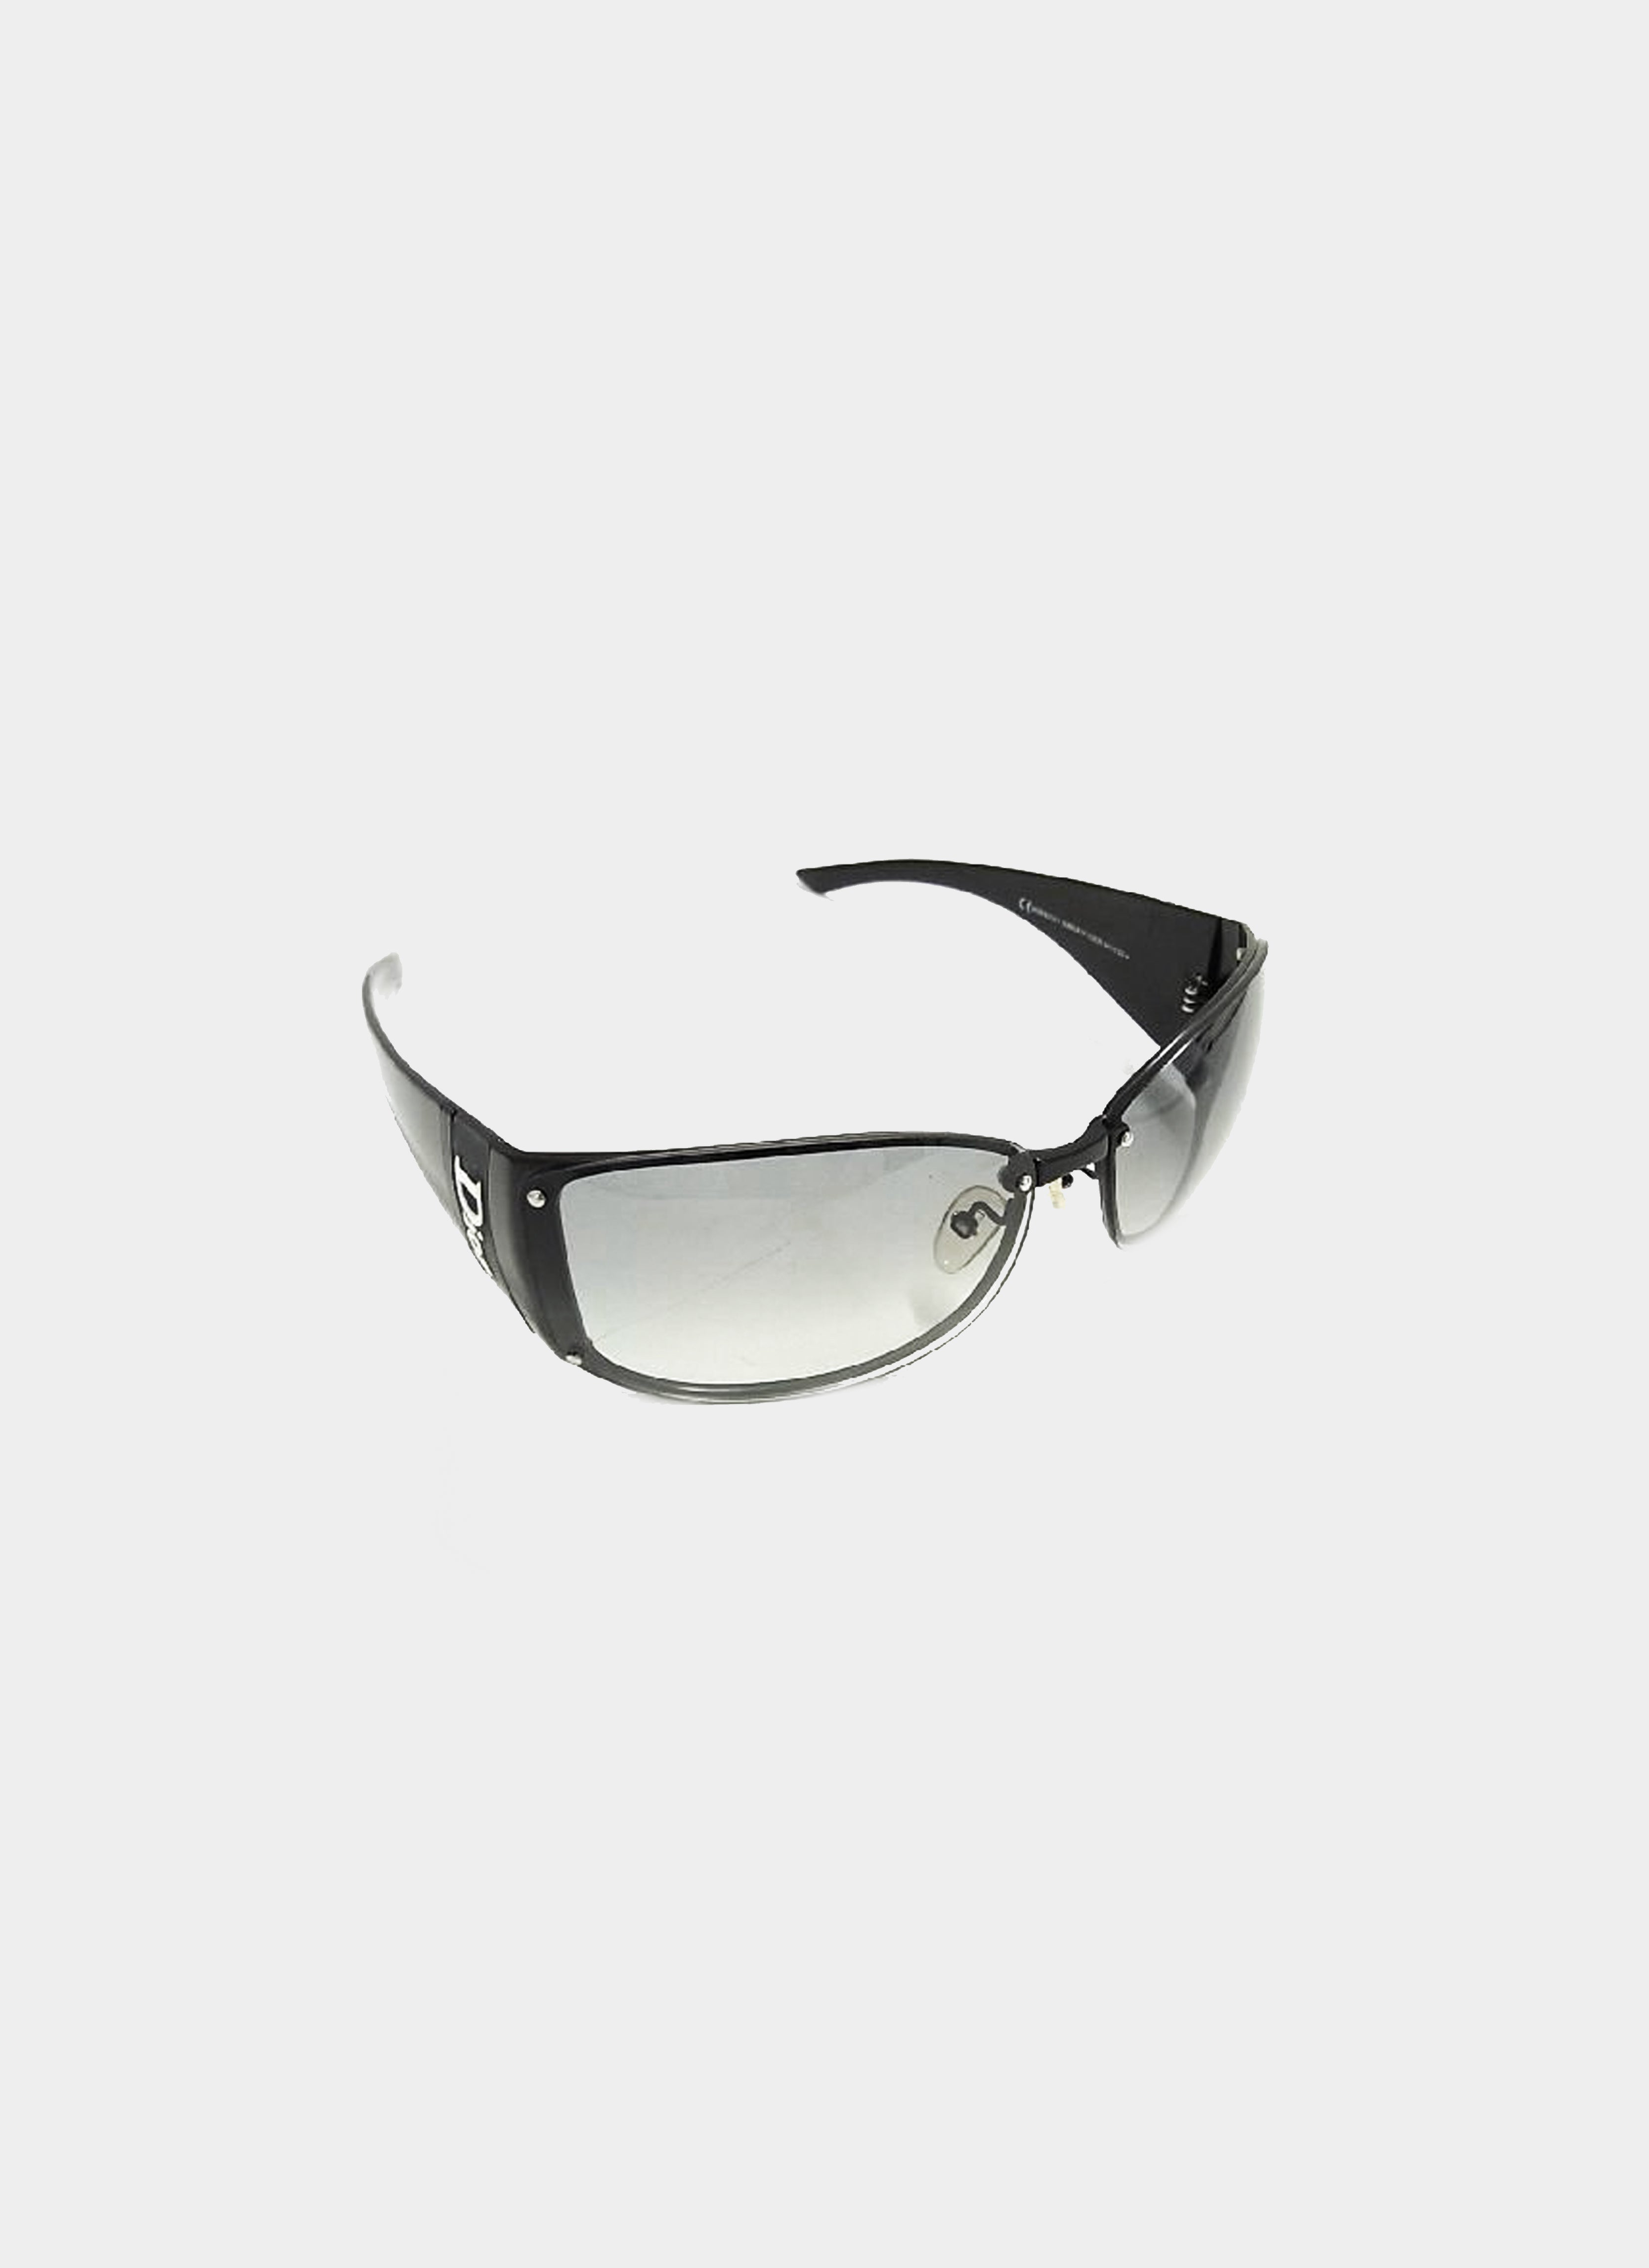 Christian Dior 2000s Visor Subdior Sunglasses